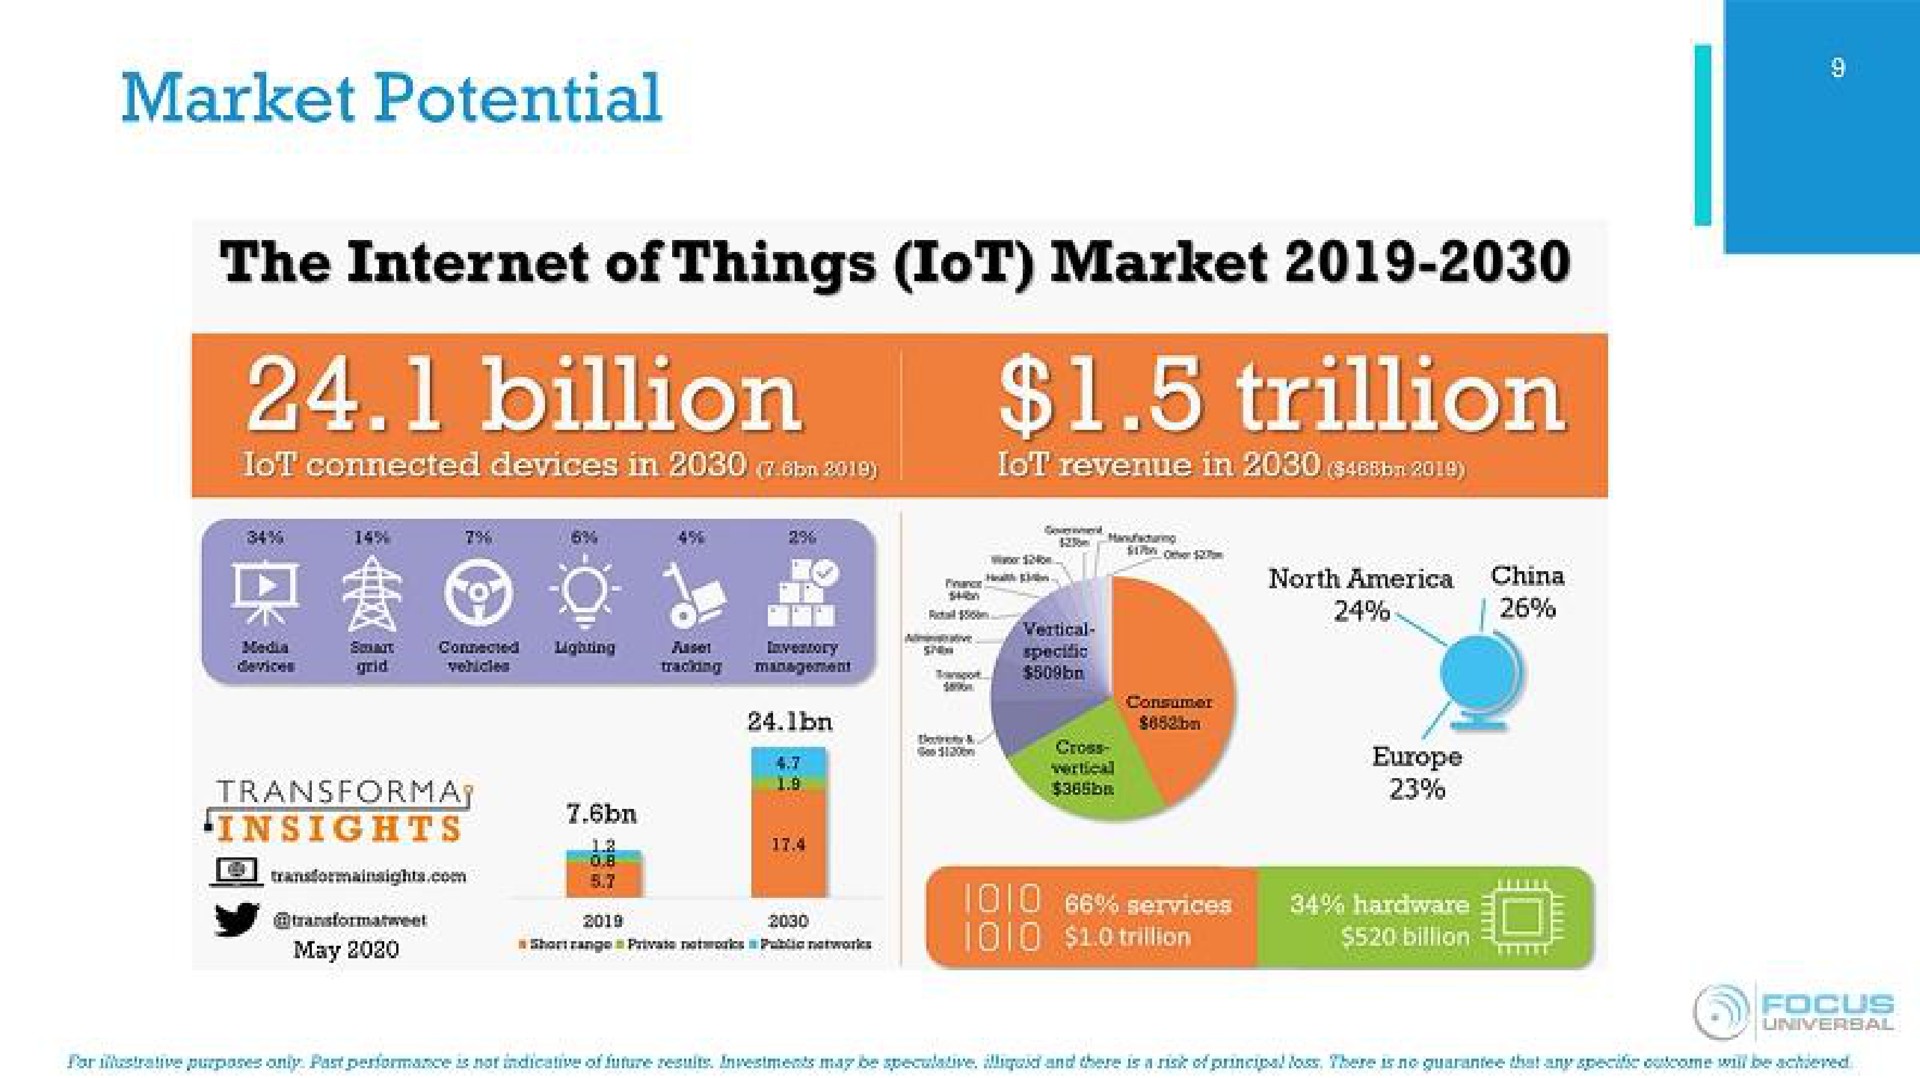 market potential the of things market trillion billion insights services hardware billion a focus | Focus Universal